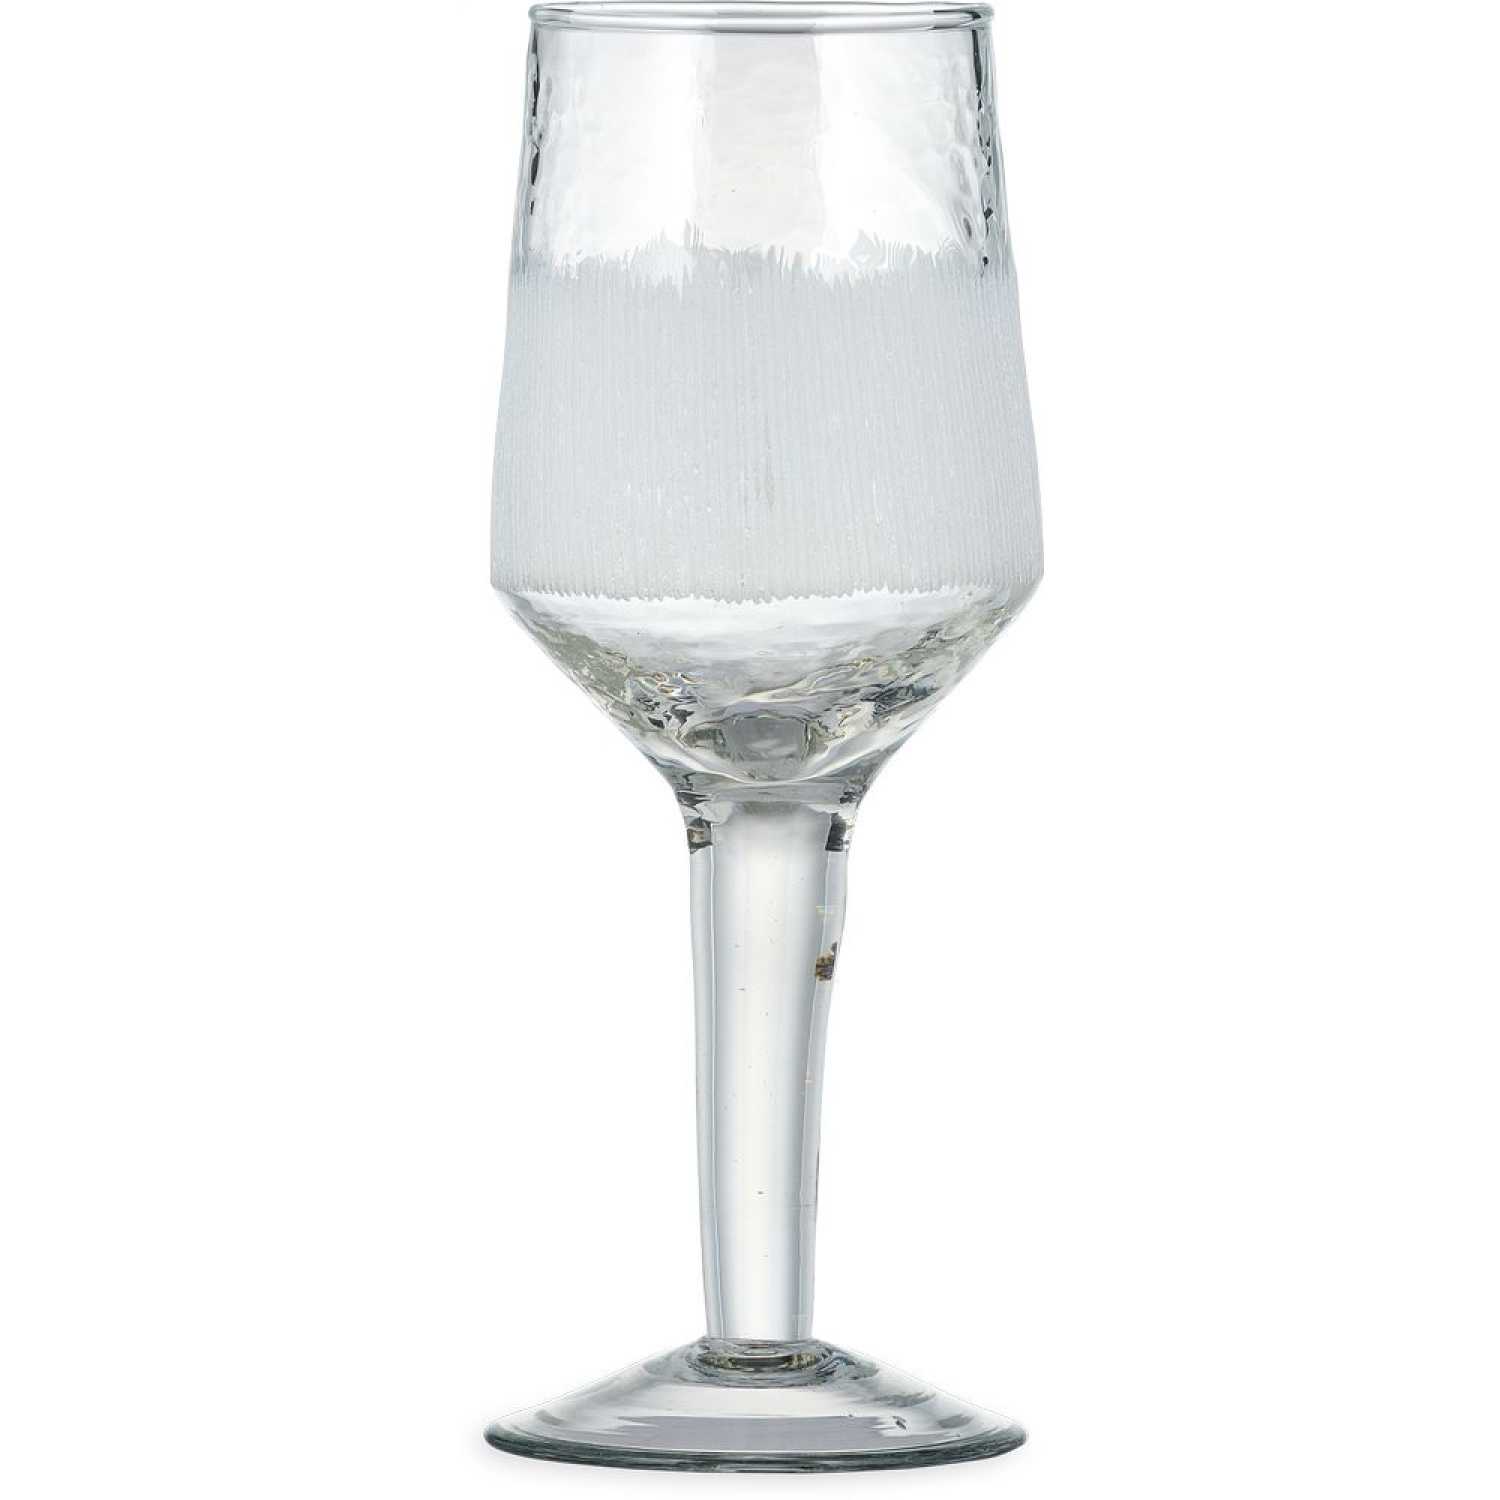 Nkuku Anara Wine Glasses - Set of 4